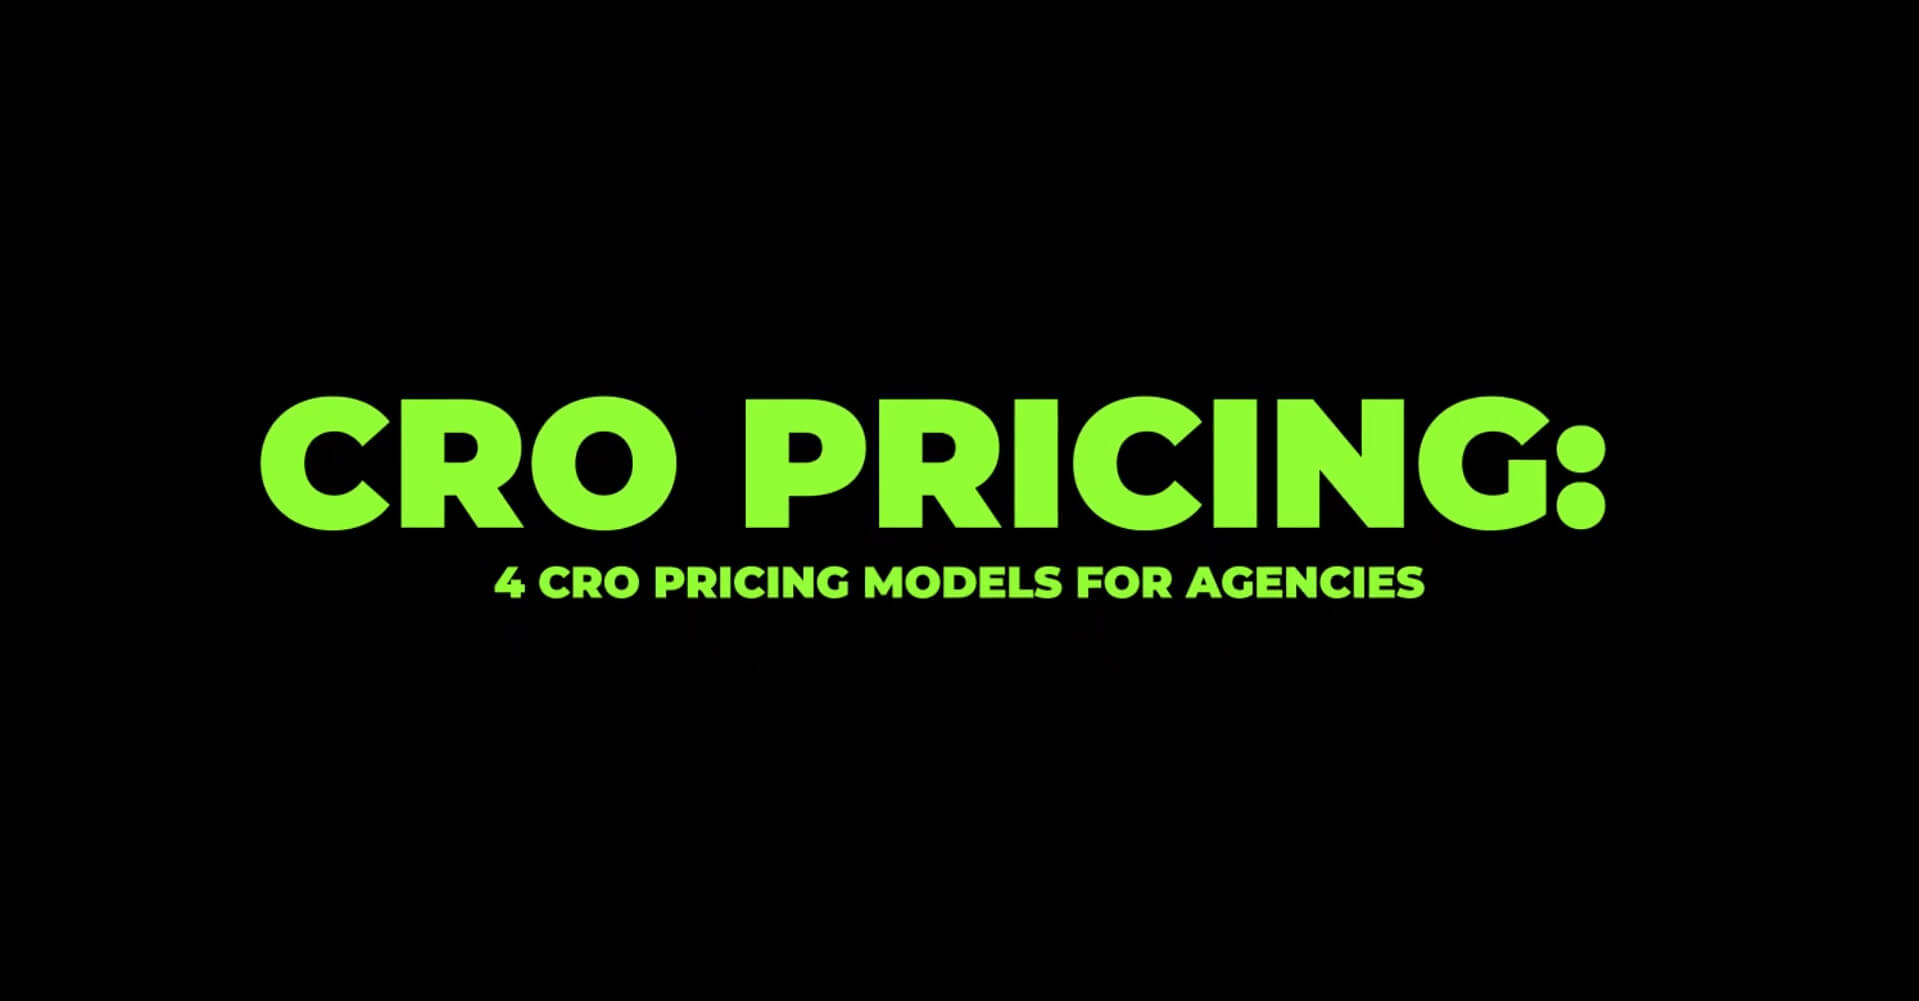 4 CRO Pricing Models for Agencies